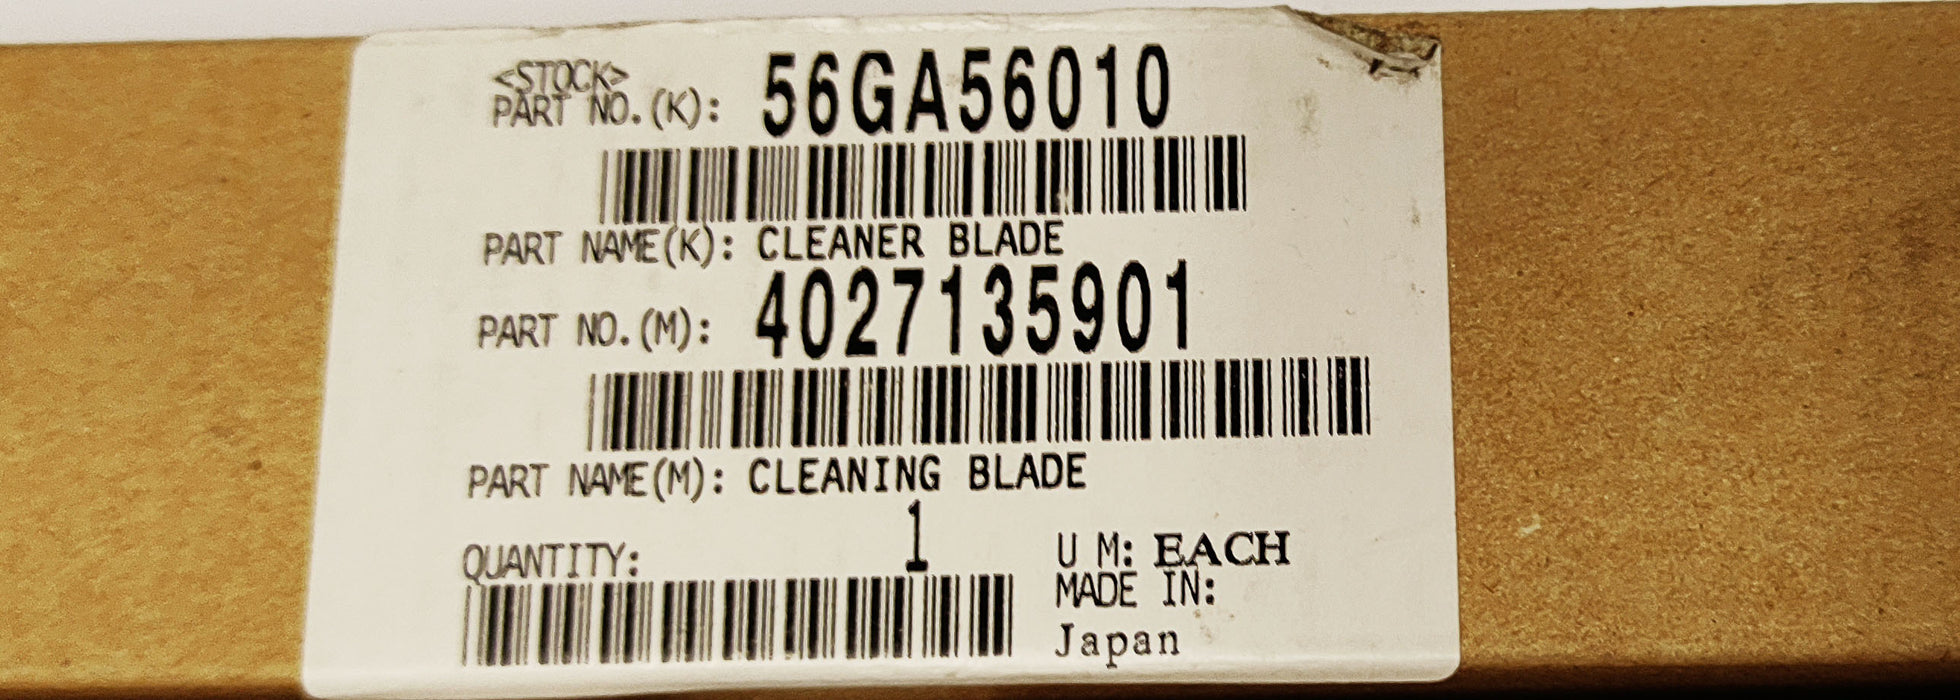 Konica Minolta Cleaner Blade | 56GA56010